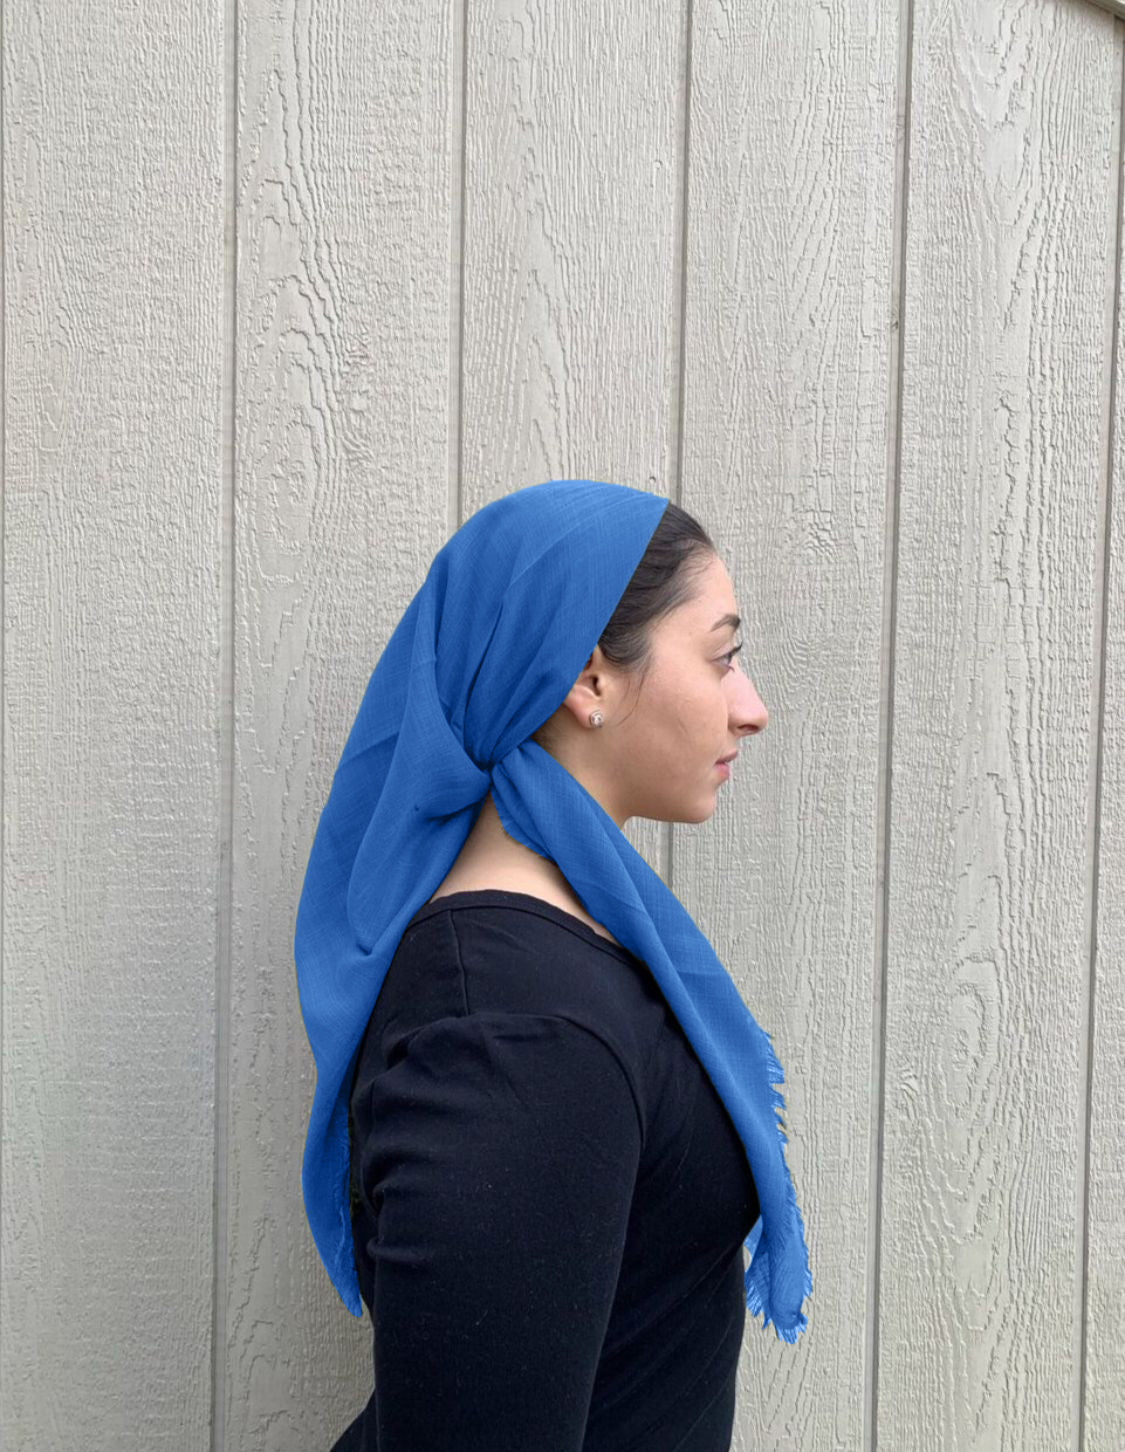 Grandpa's Blue Jeans Headscarf (𝑆𝑝𝑟𝑖𝑛𝑔 + 𝑆𝑢𝑚𝑚𝑒𝑟)